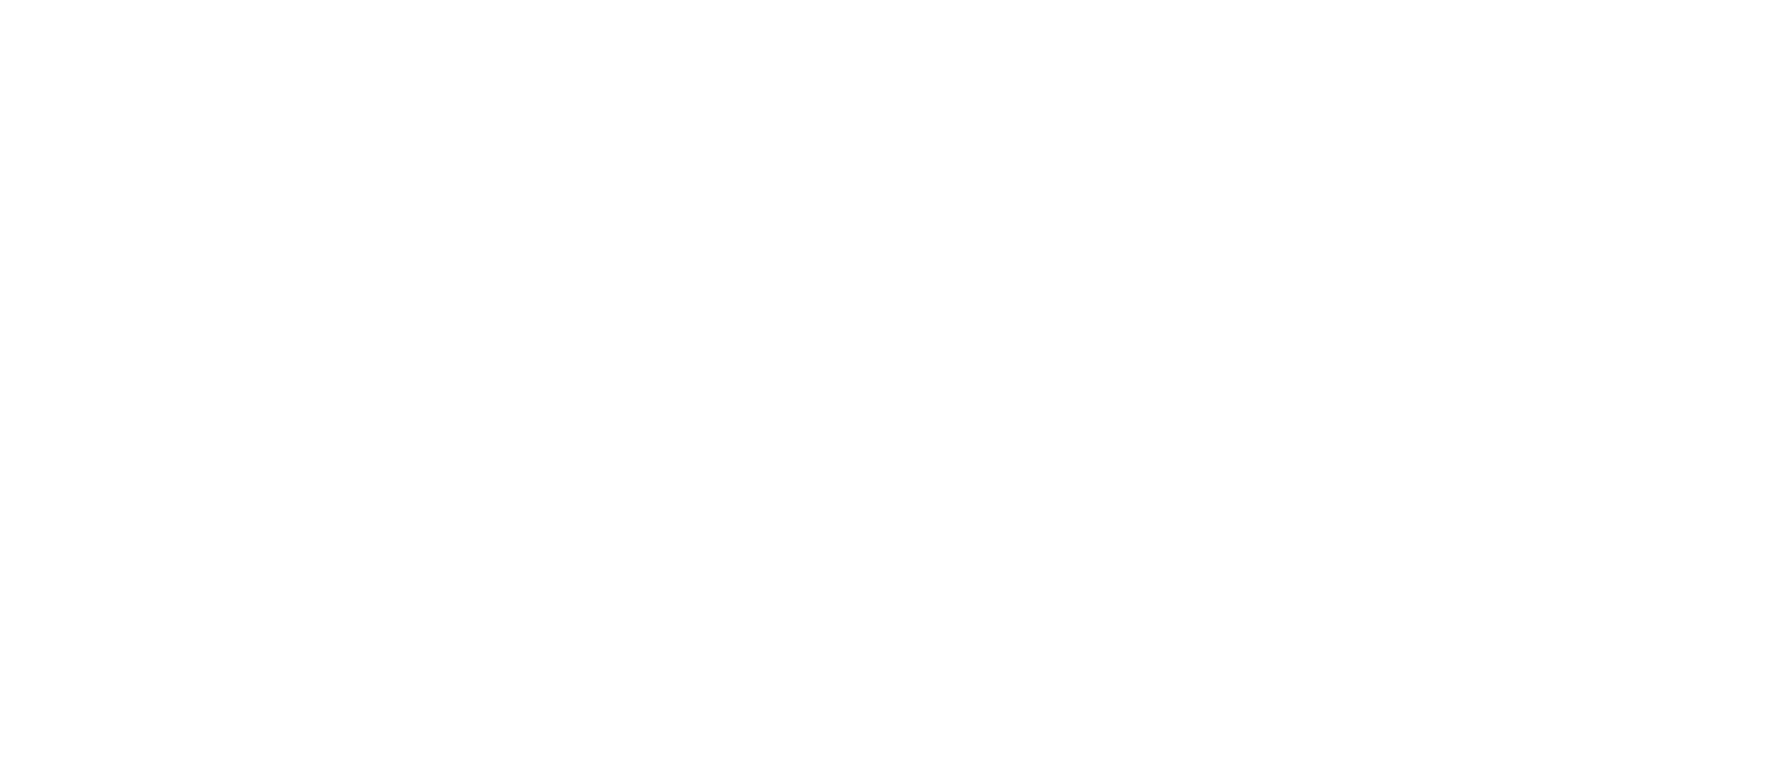 Logo-TCV